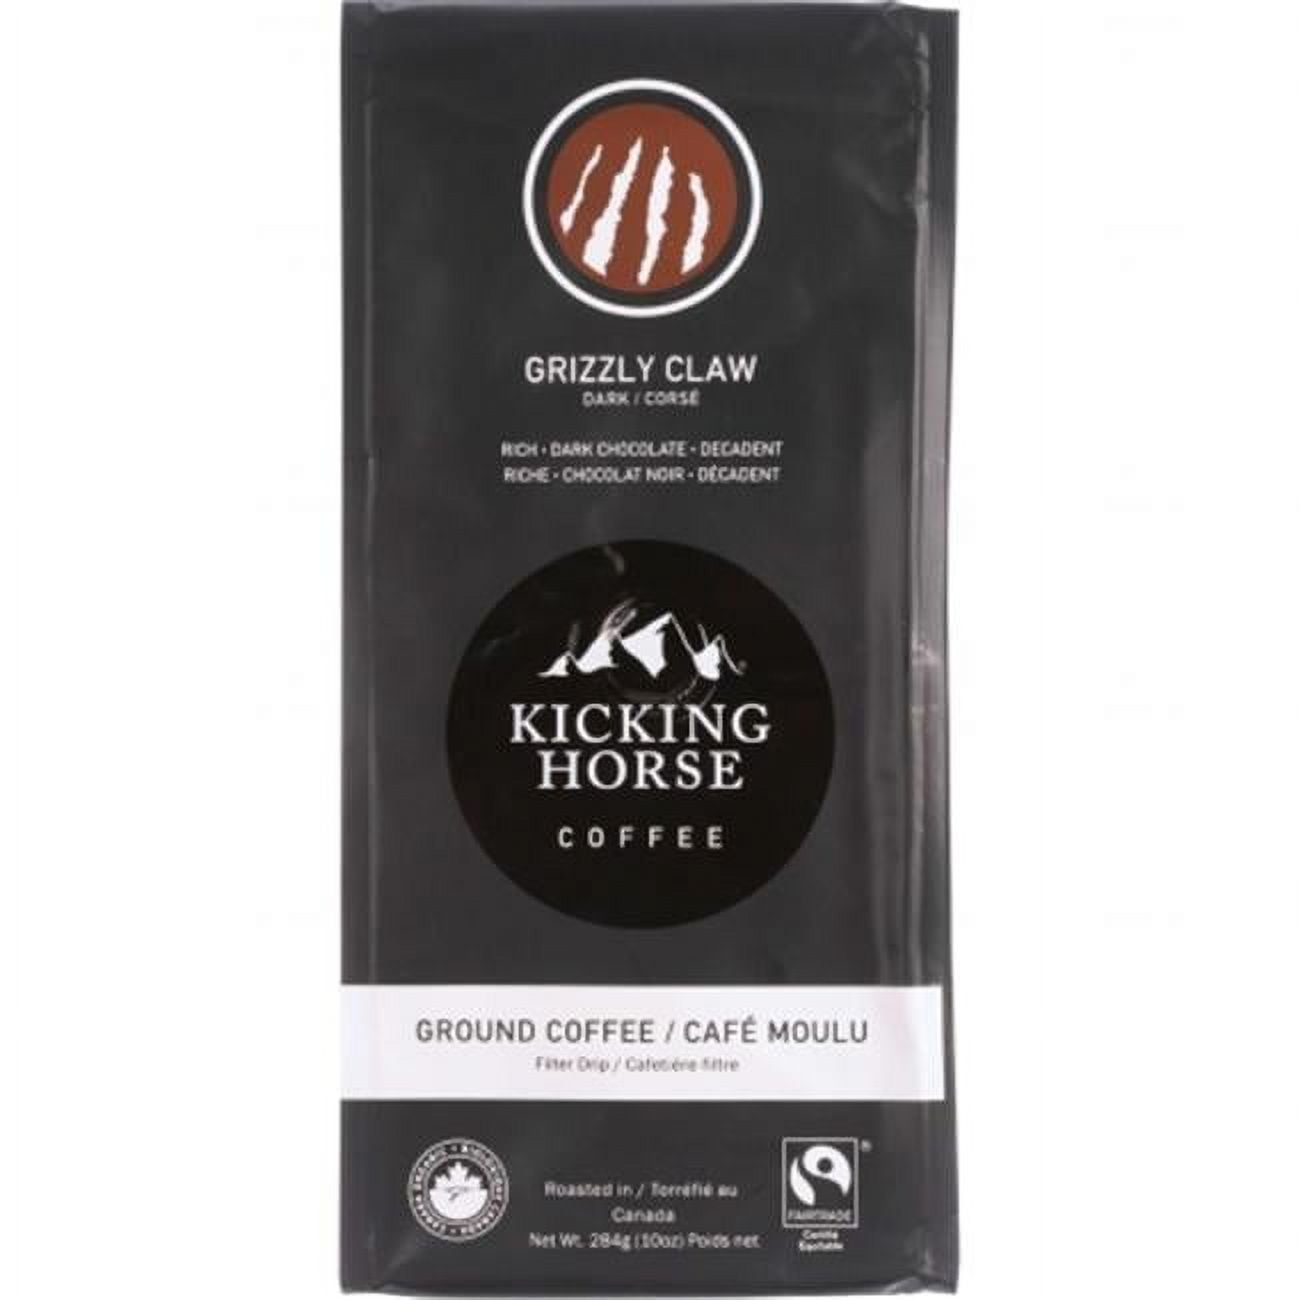 Krios Coffee Essentials Ground Coffee, Enhance Productivity & Health with Vitamin B-Complex and D3, Medium Roast, Smooth, 10 oz Bag